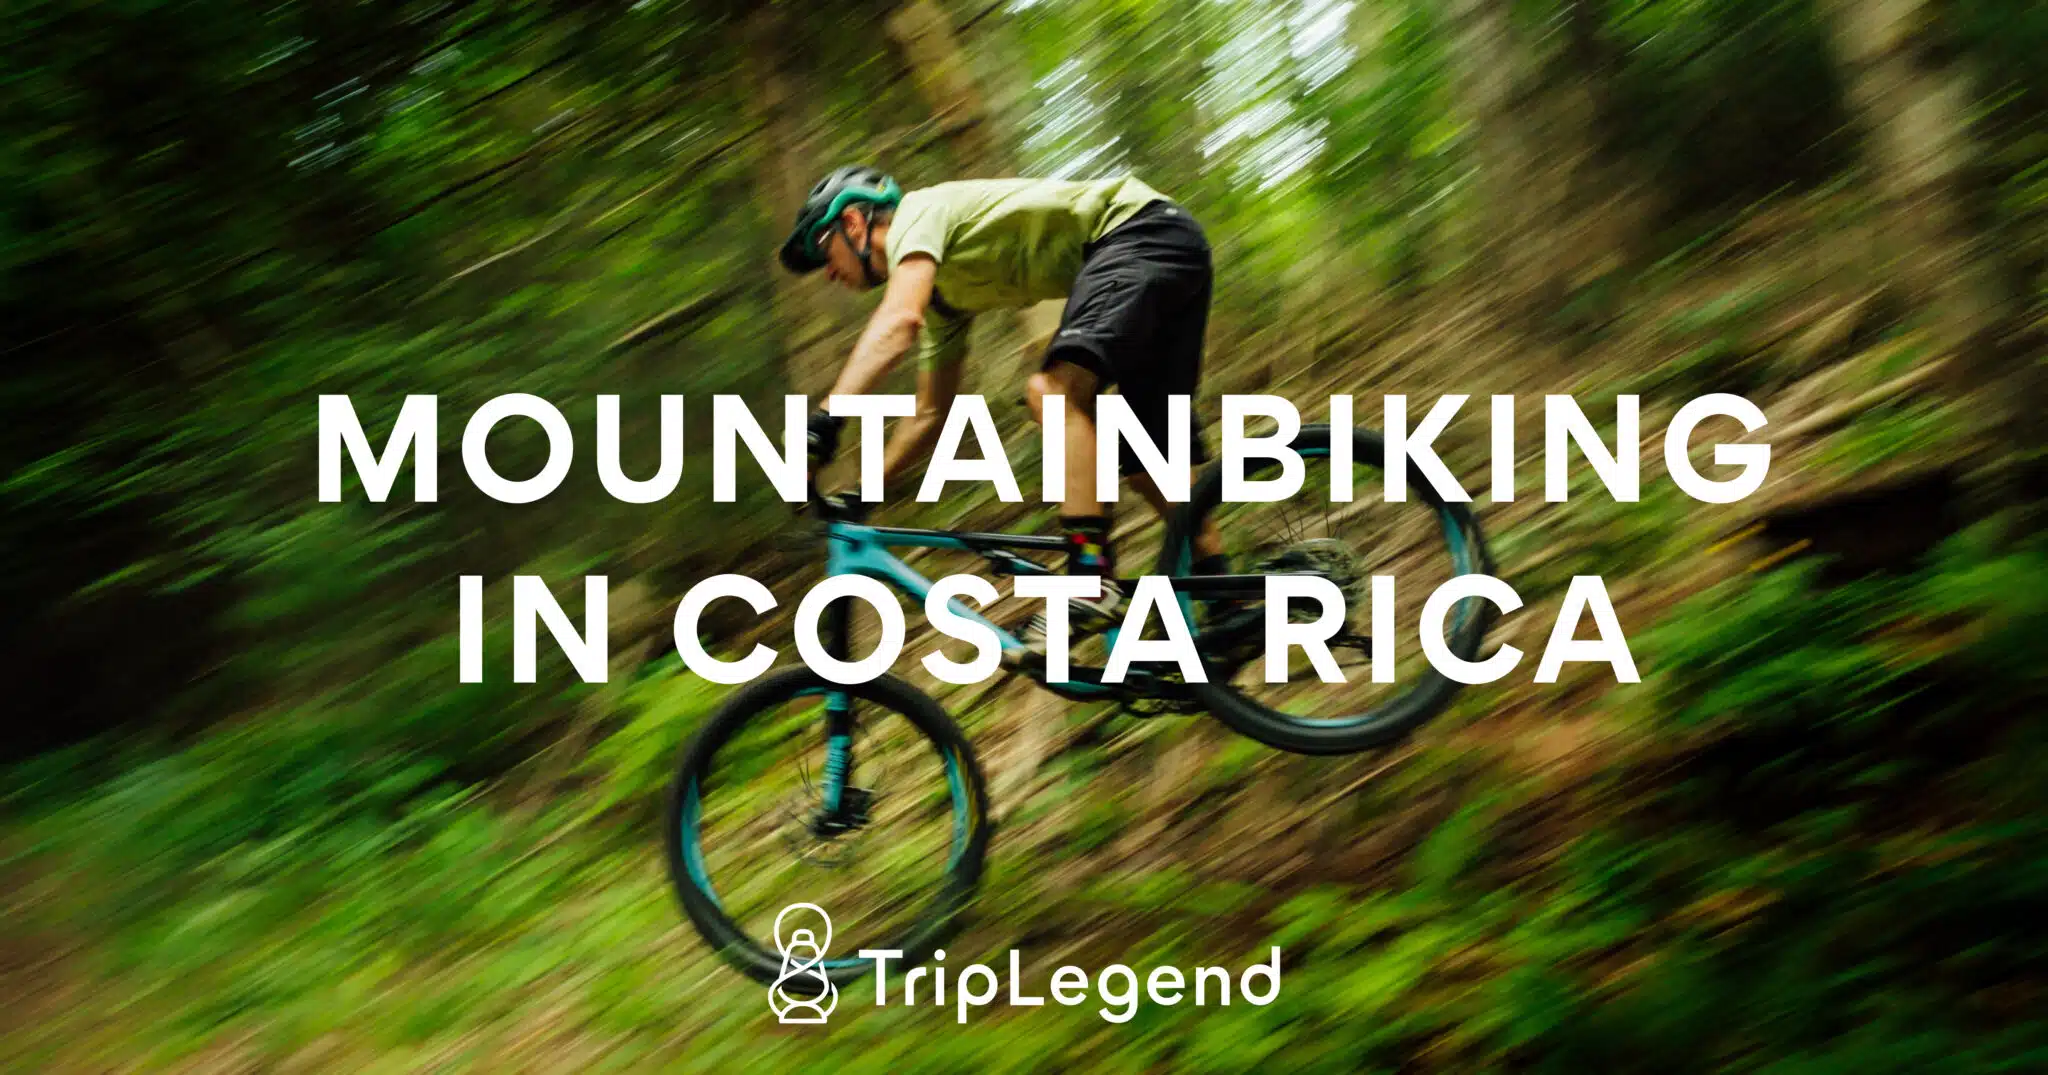 Mountainbike in Costa Rica 2 in scala.jpg